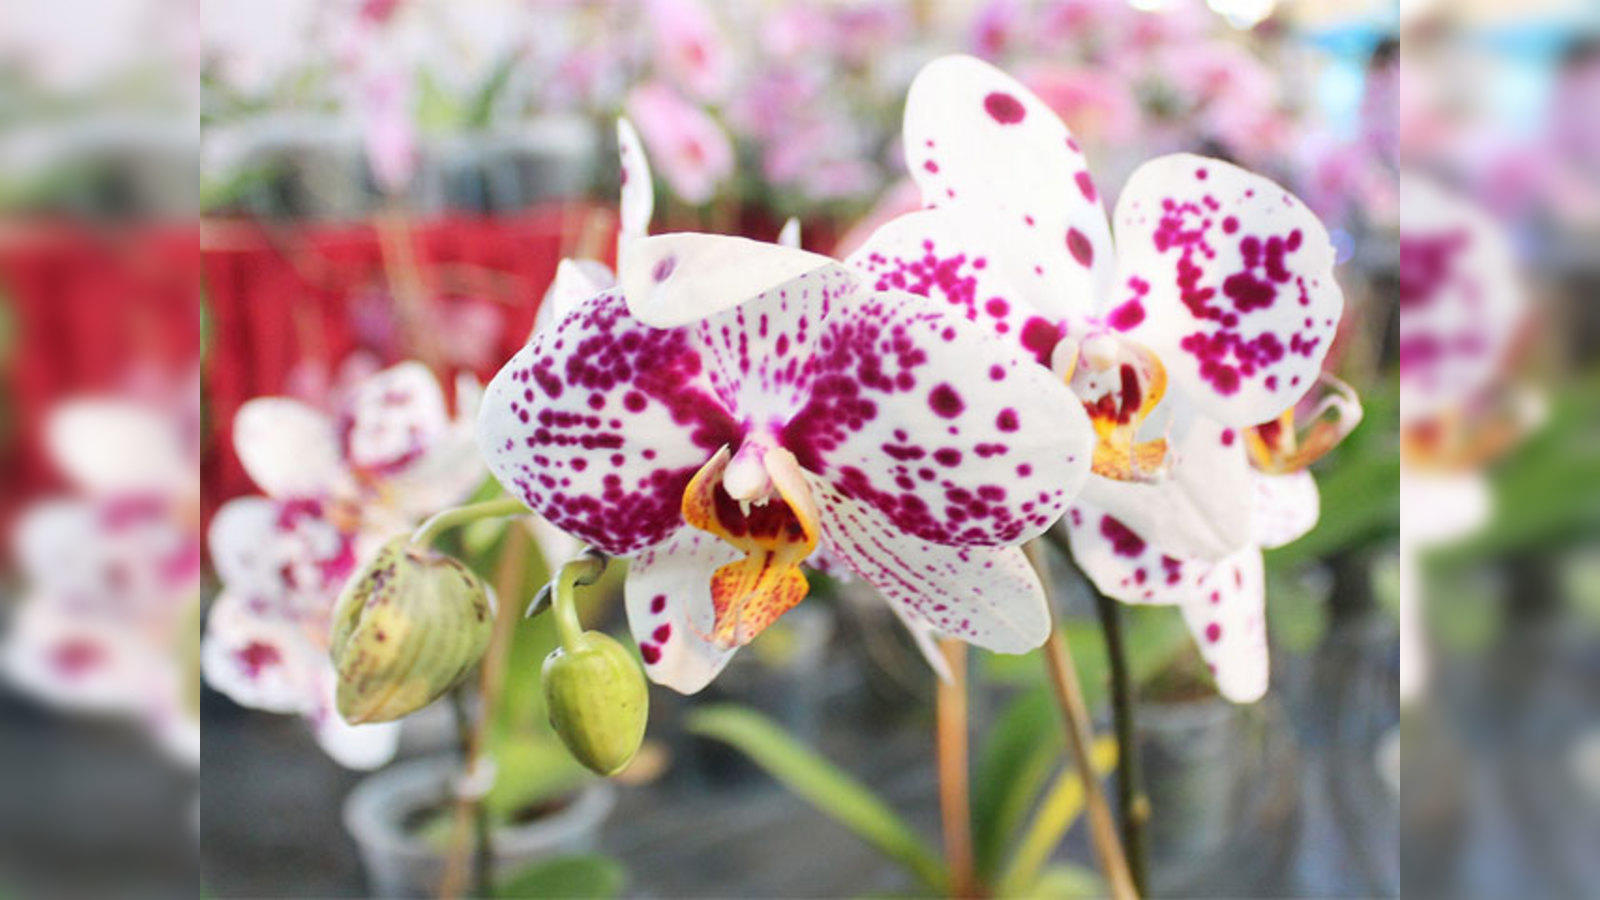 Meghalaya S Orchids Under Threat Need